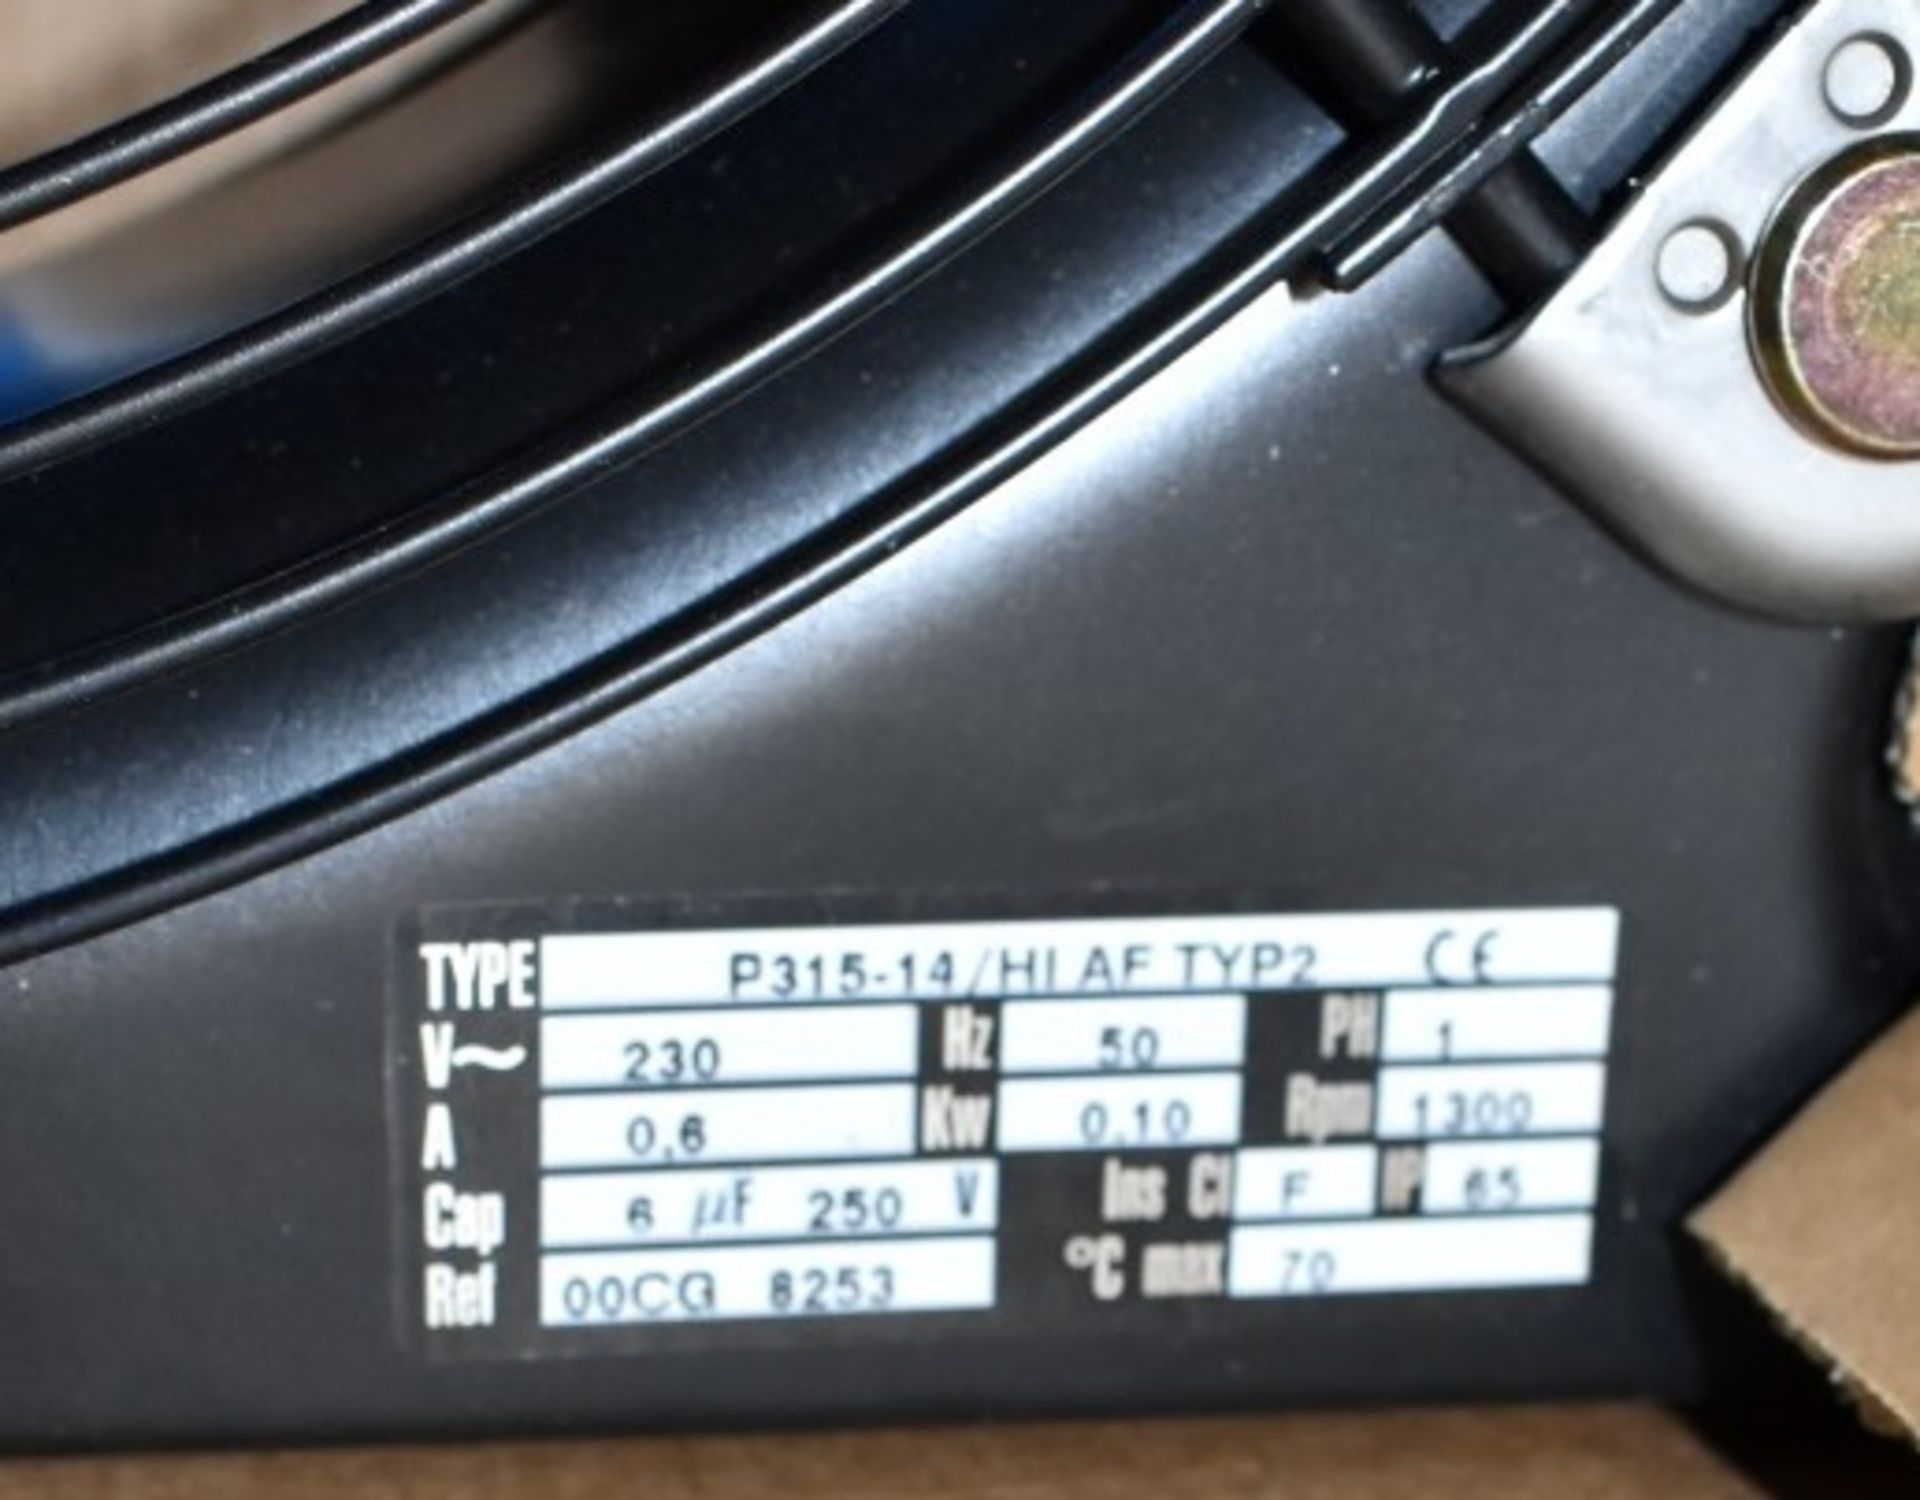 1 x Vent-Axia Plate Mounted Axial Fan With Fan Speed Controller - Industrial Range - 230v 315mm Fan - Image 5 of 5